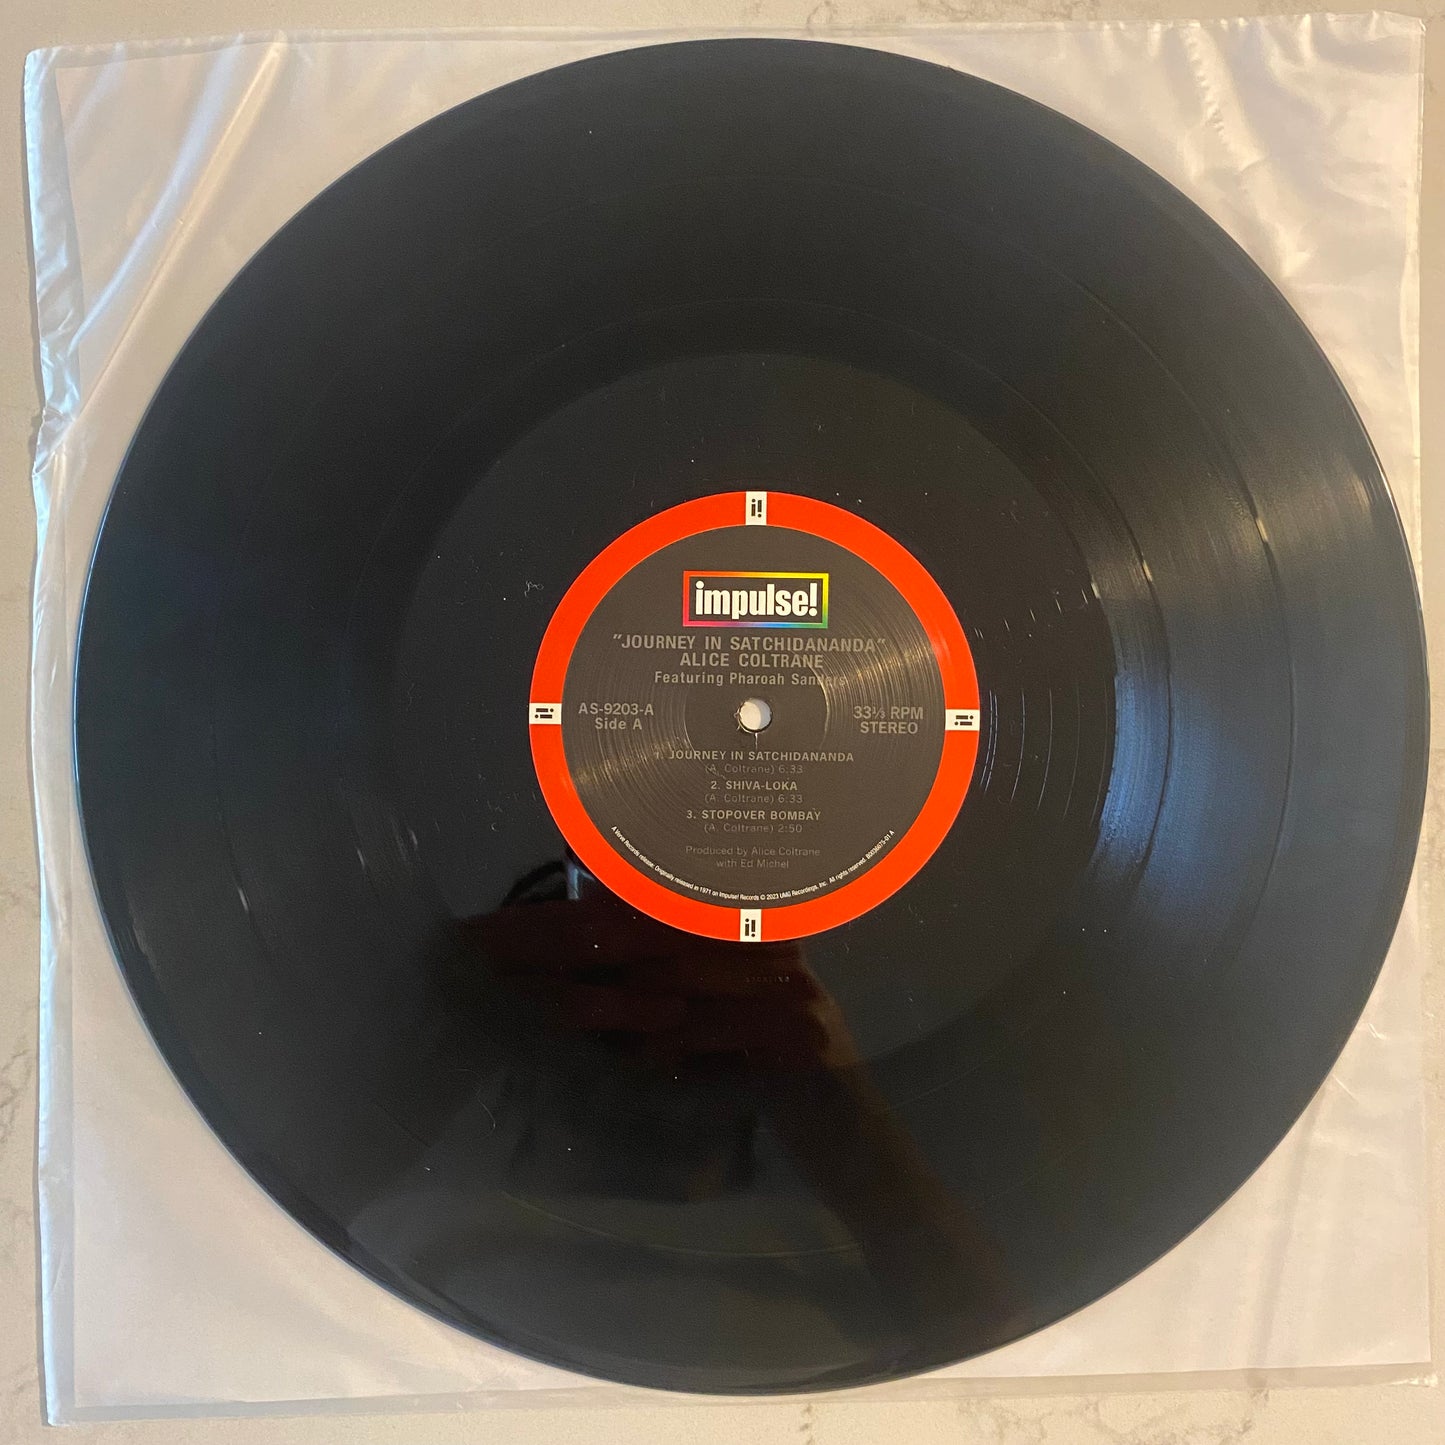 Alice Coltrane Featuring Pharoah Sanders - Journey In Satchidananda (LP, Album, RE, 180) (L)